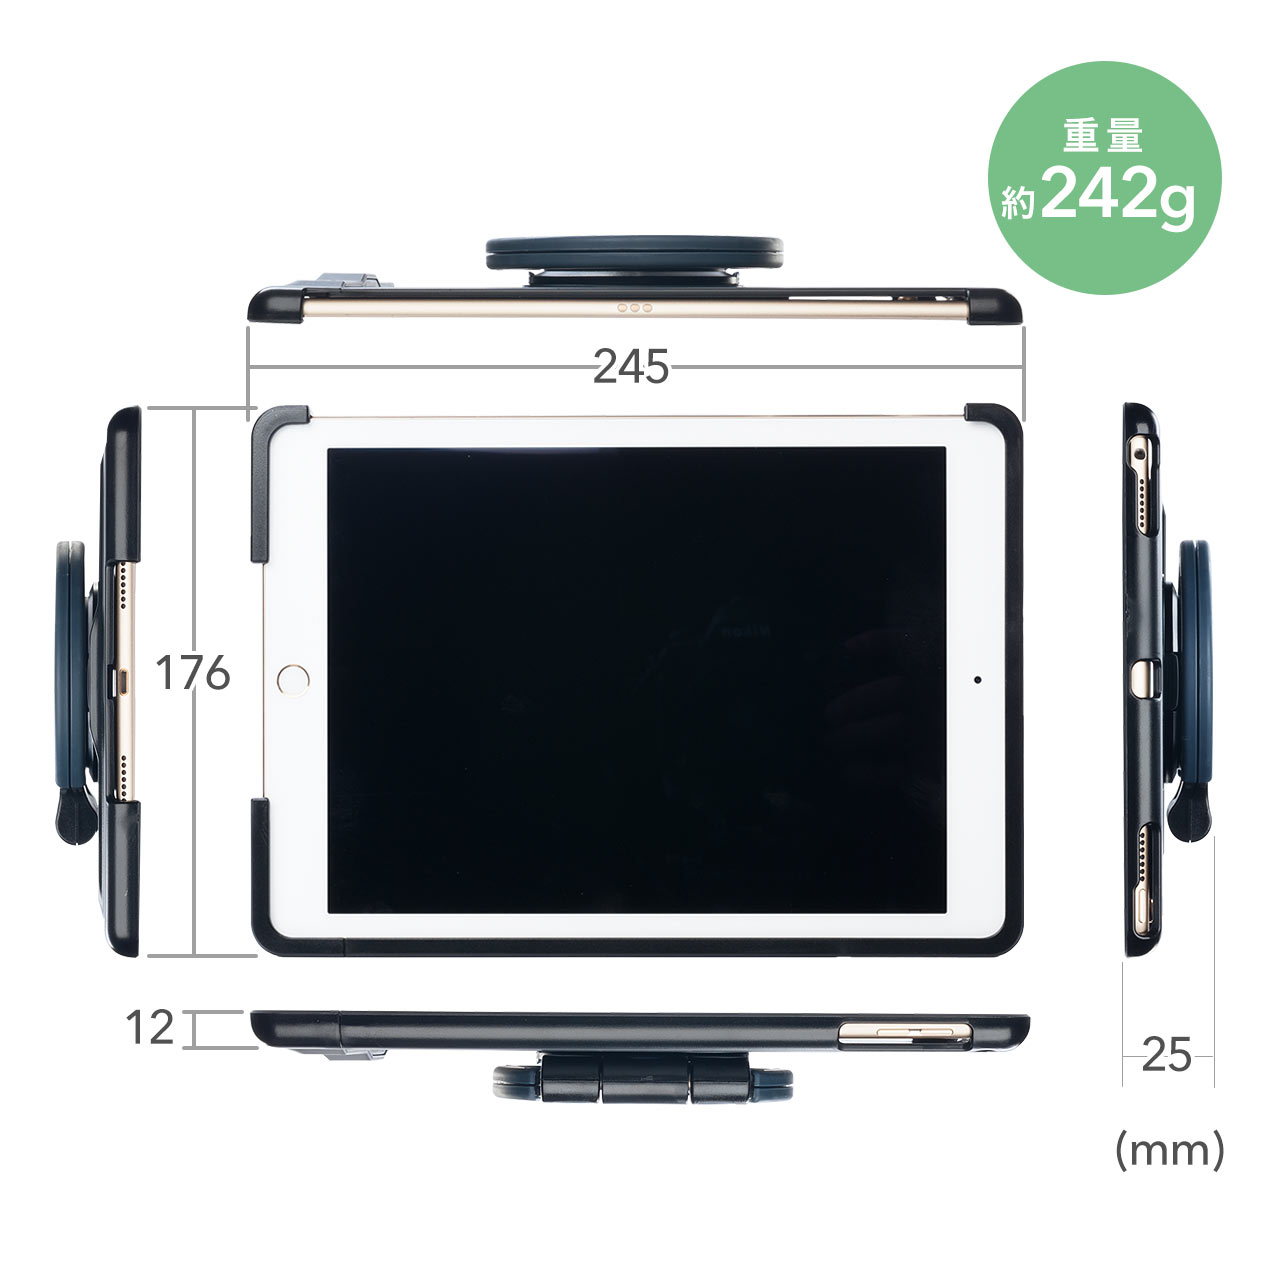 AEgbgFiPadZLeB[X^hi9.7C`iPad ProE9.7C`iPadi2017jEiPad Air 2EiPad Airpj Z200-SL043BK